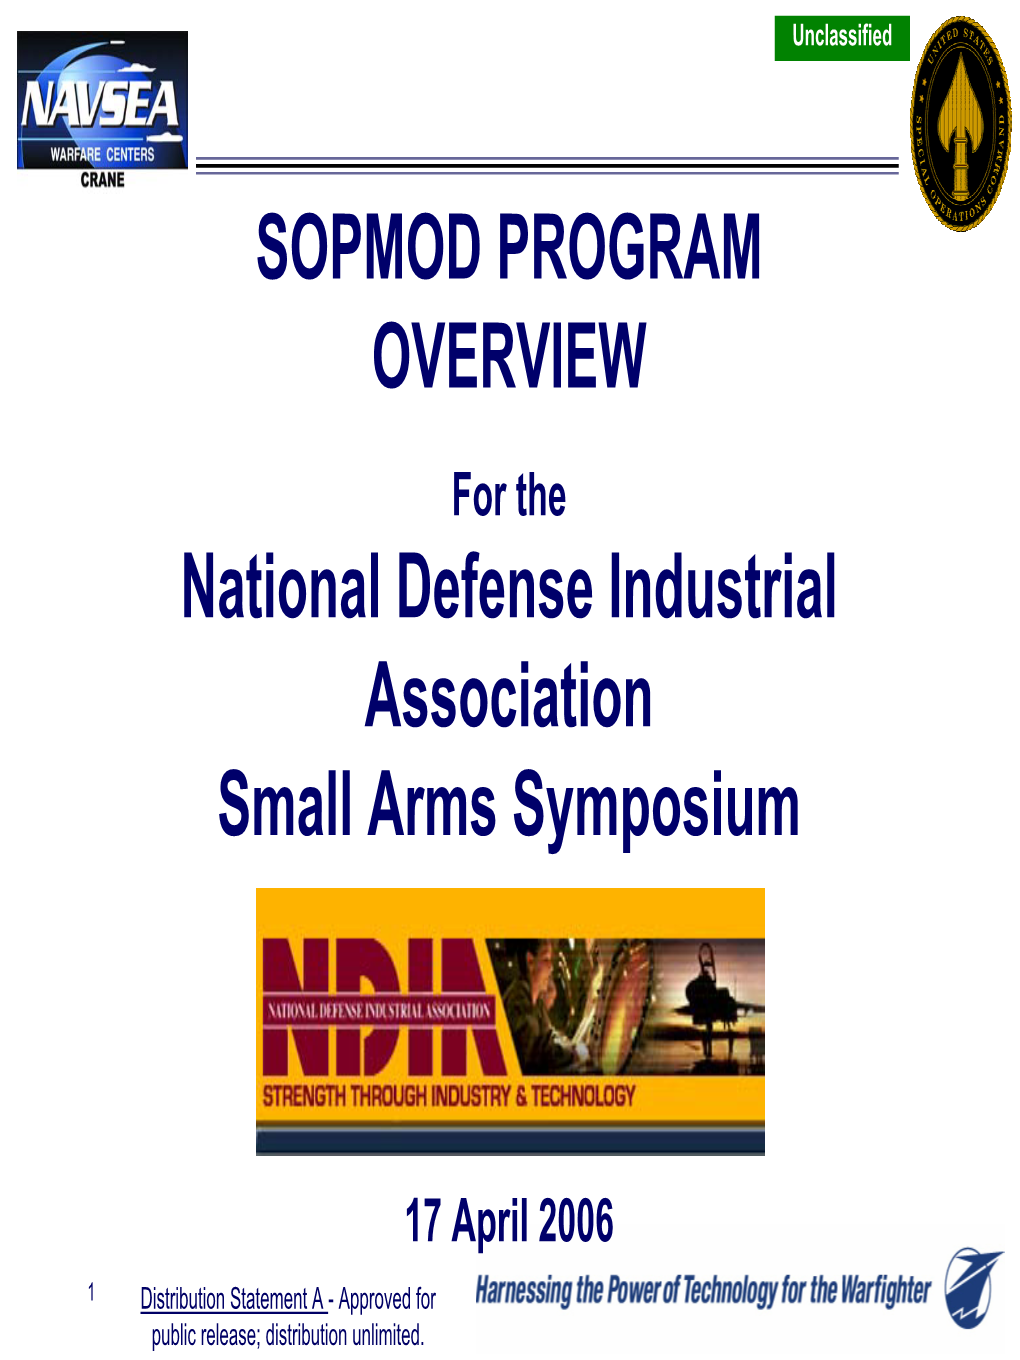 SOPMOD PROGRAM OVERVIEW National Defense Industrial